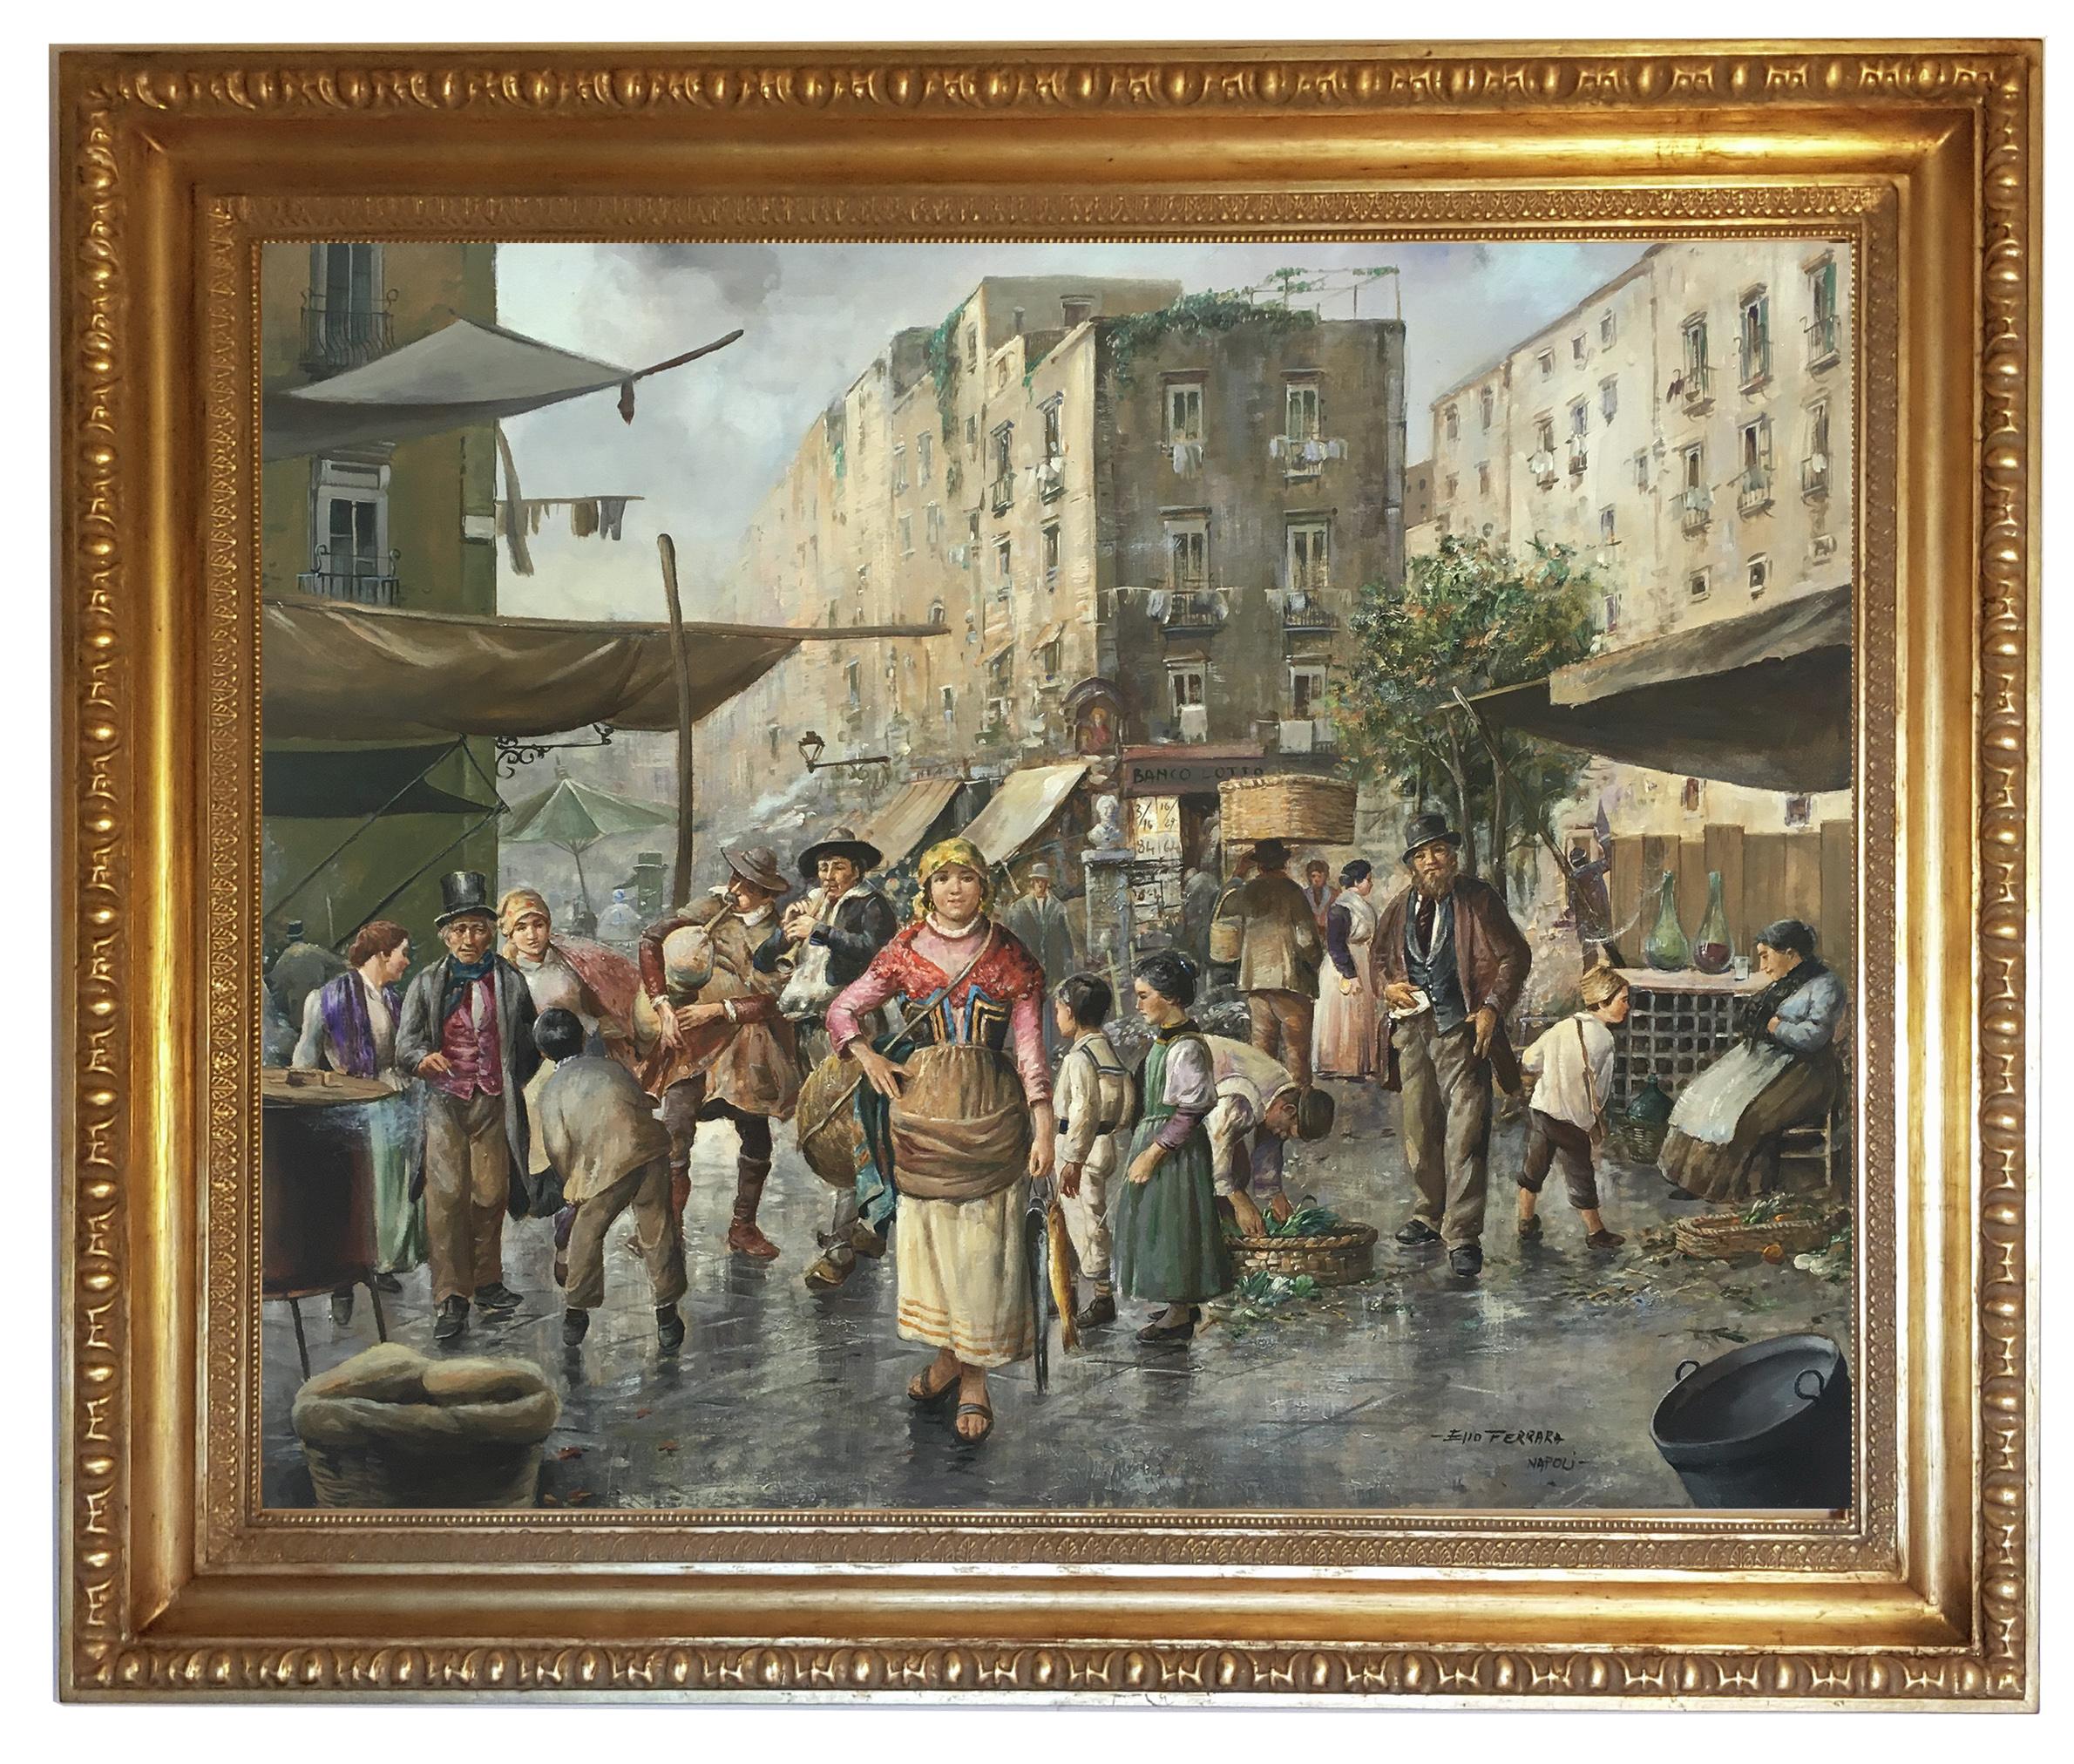 LA VIGILIA DI NATALE - Elio Ferrara Italian figurative oil on canvas painting